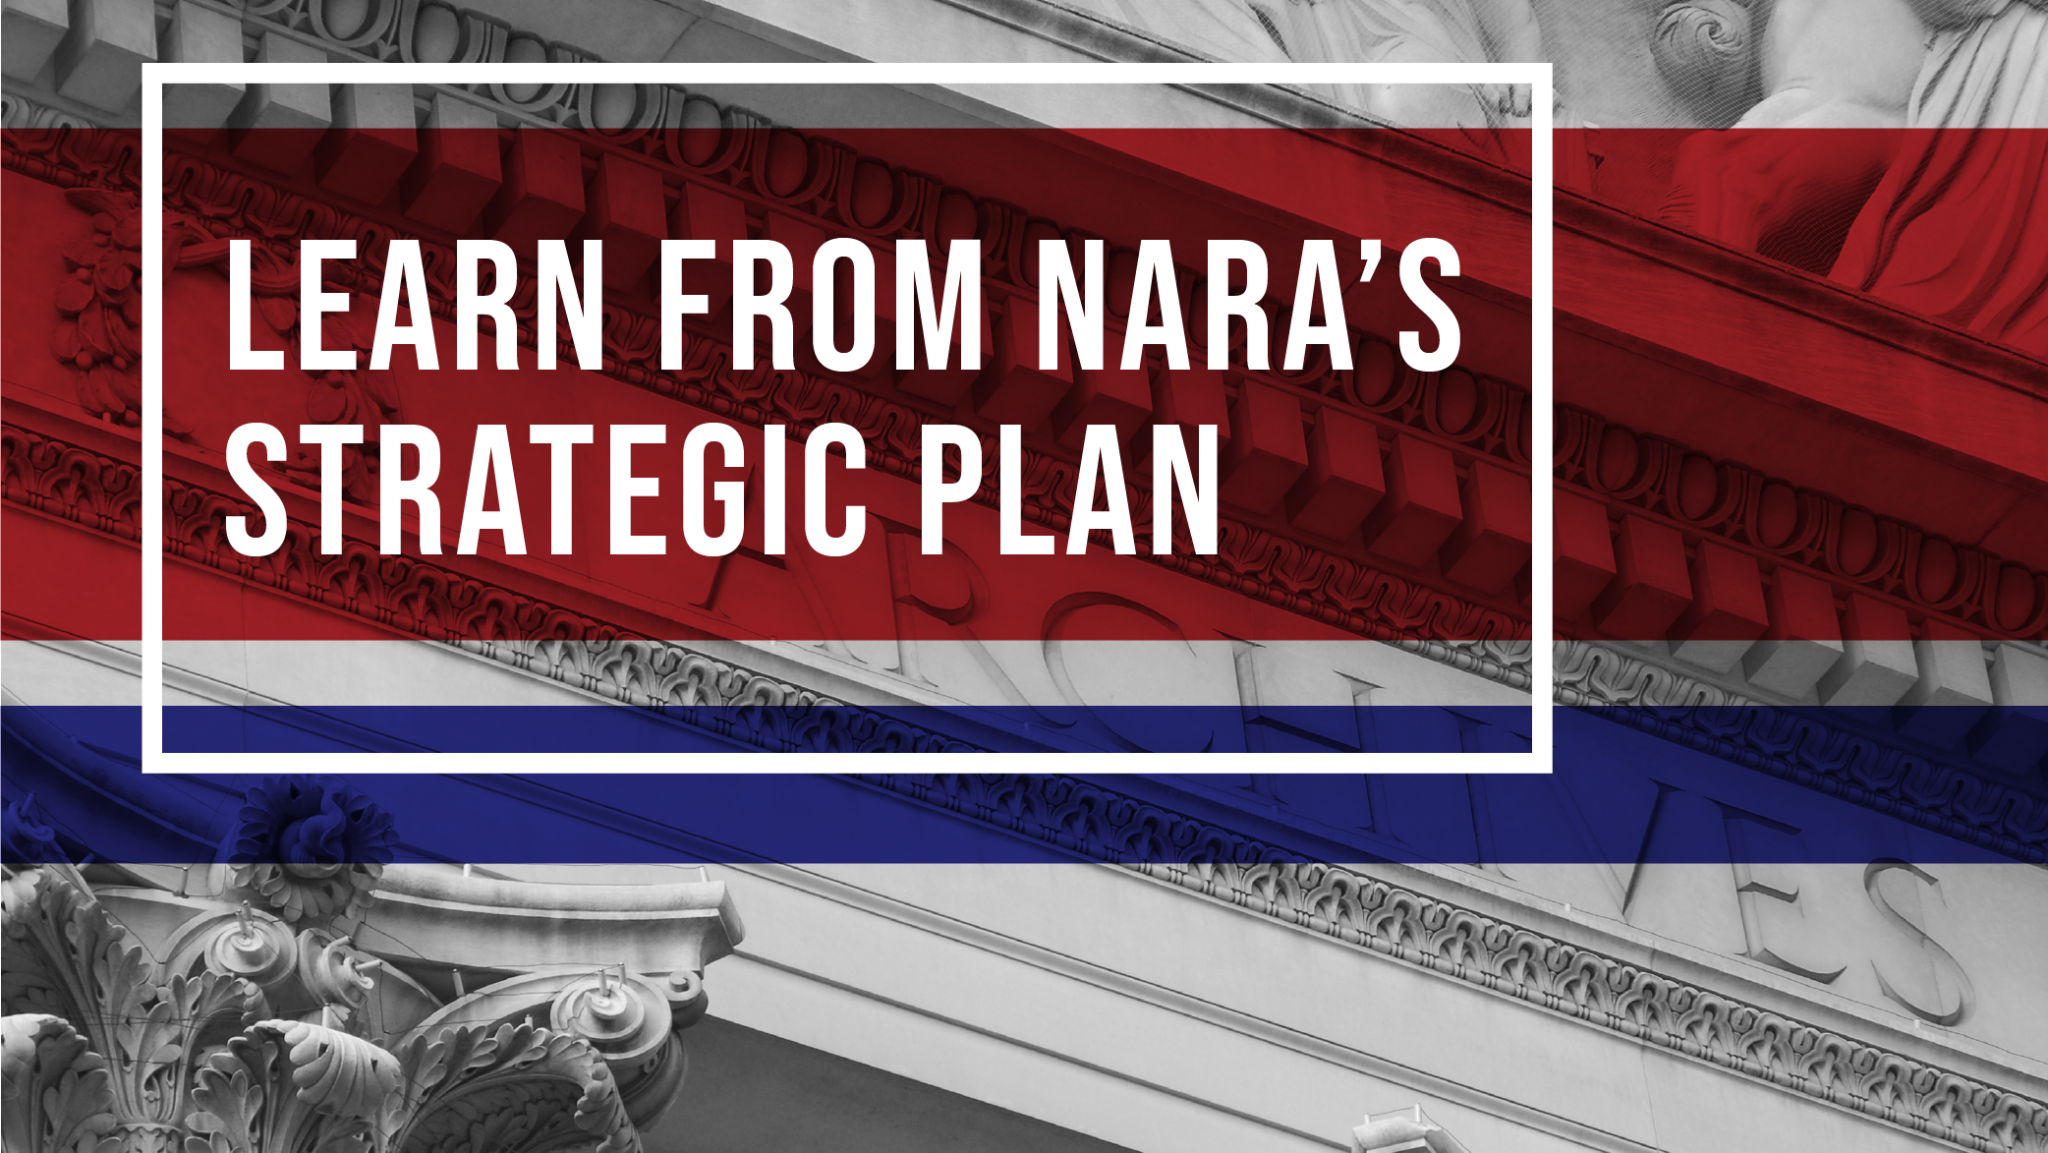 Learn from NARA's Strategic Plan